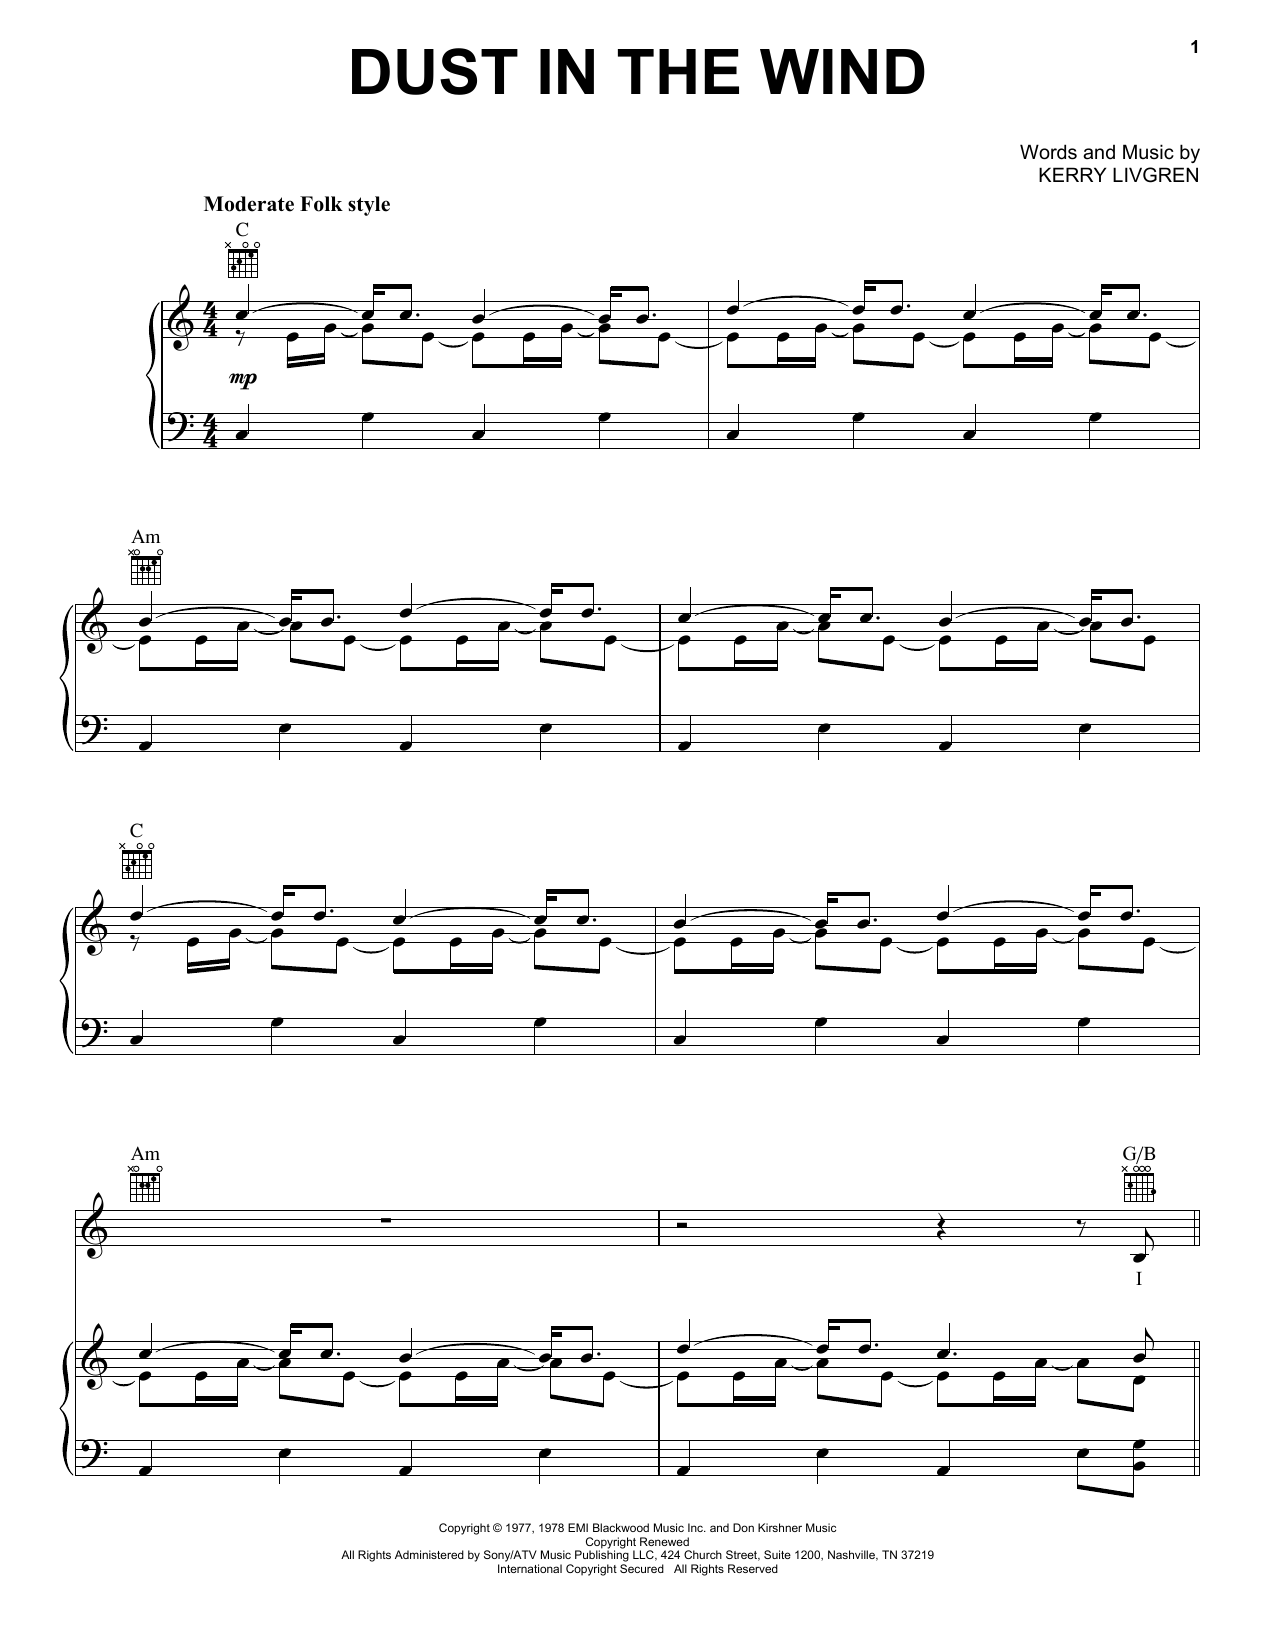 Kansas Dust In The Wind sheet music notes printable PDF score